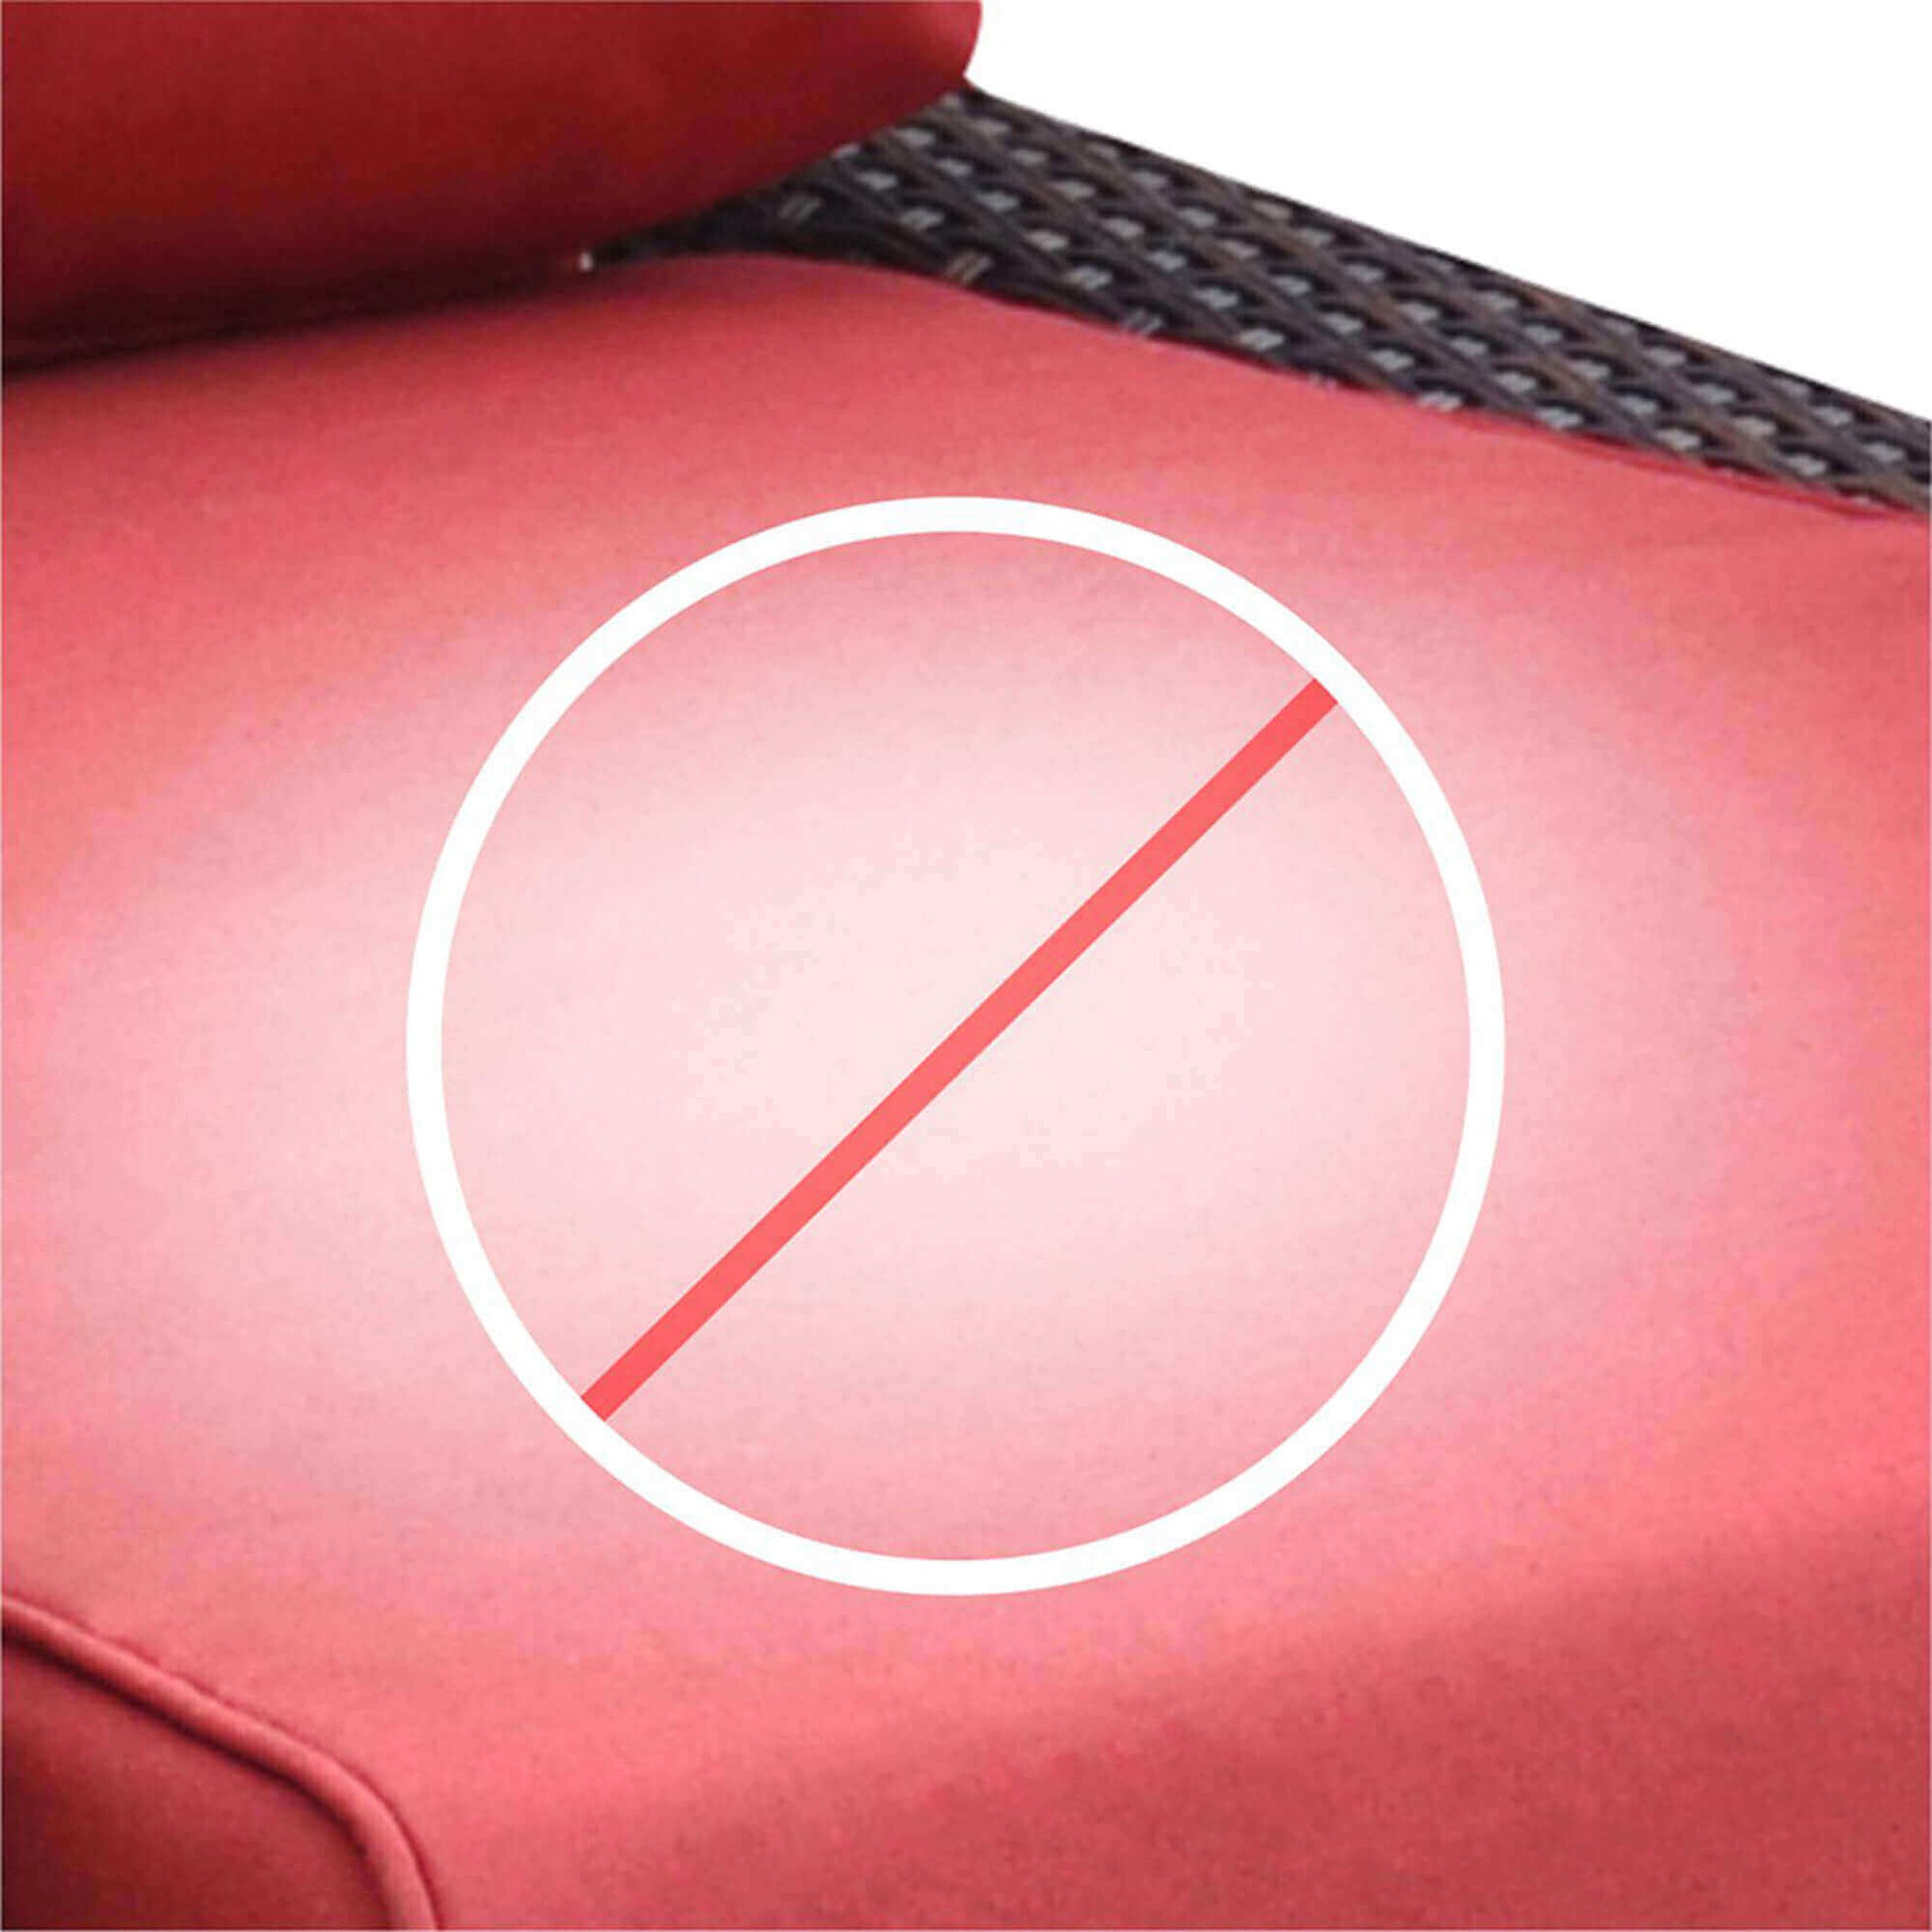 ATR Recliner Cushion Cover / Patio Wicker Recliner Cushion Cover (Cushion not included)